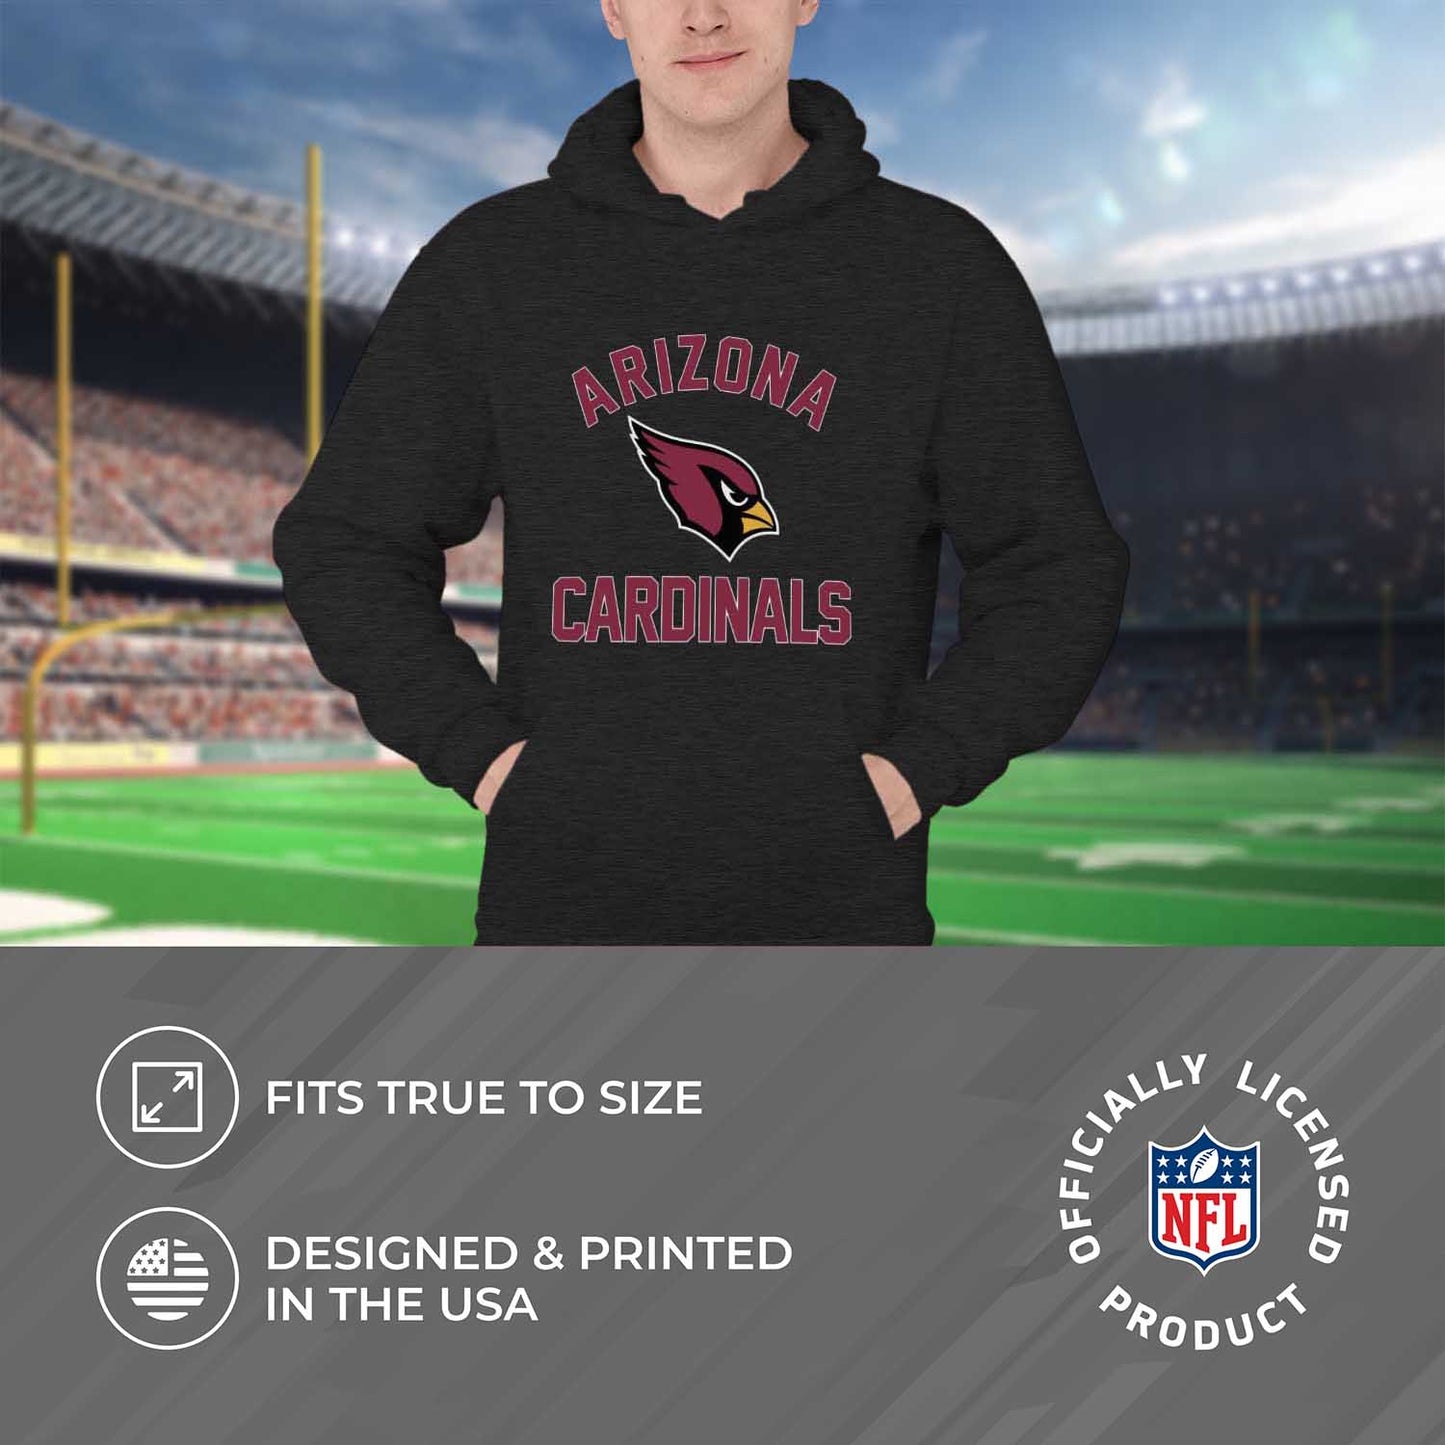 Arizona Cardinals NFL Adult Gameday Hooded Sweatshirt - Charcoal